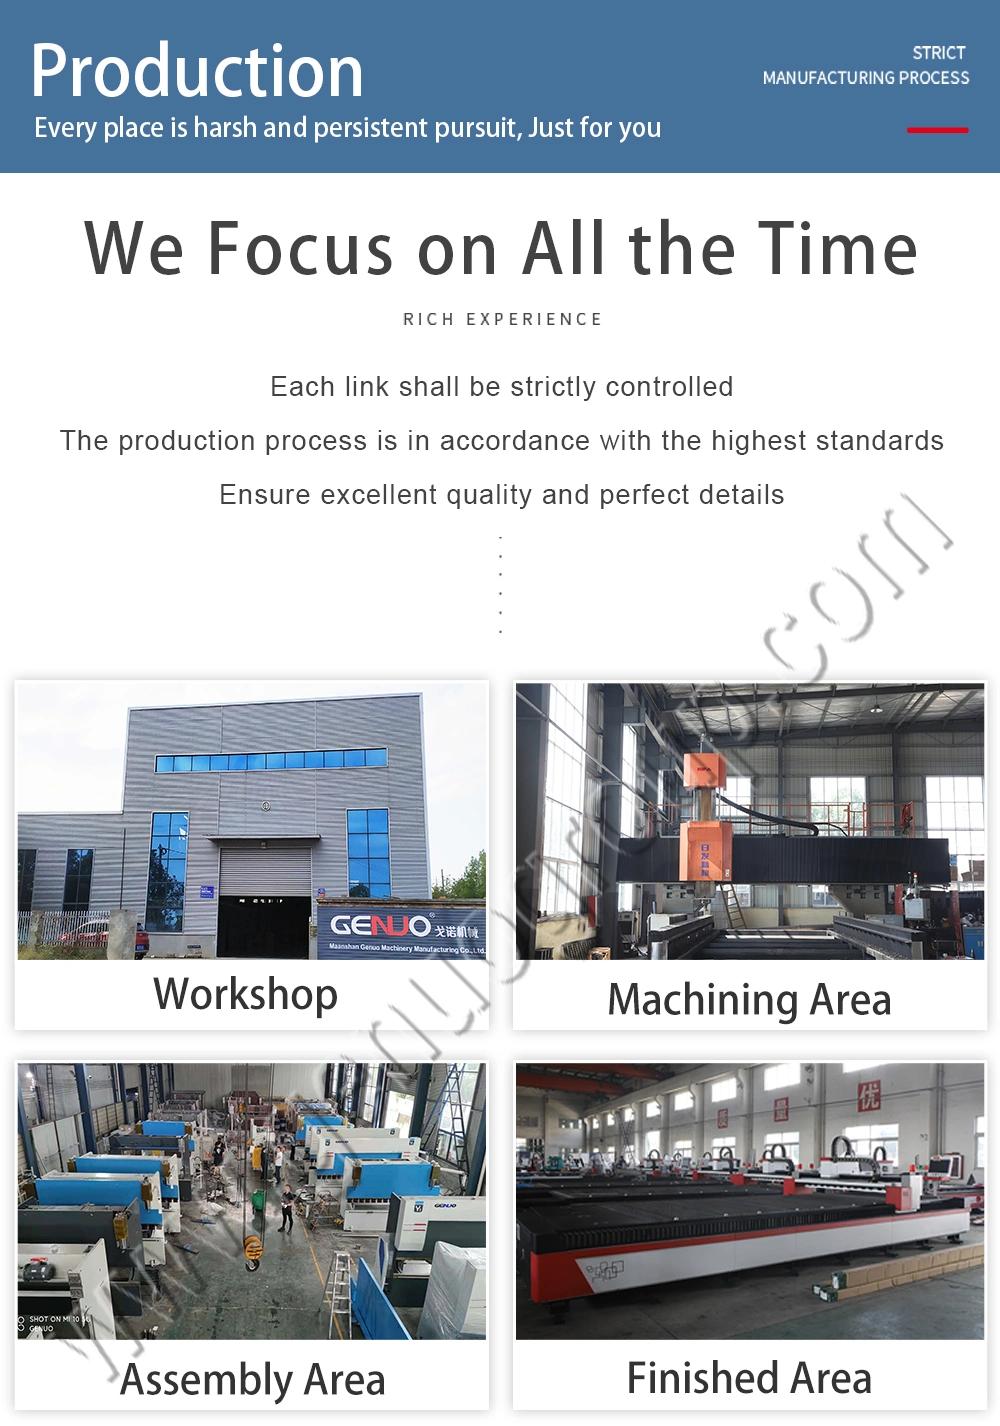 Aluminium CNC Profile Processing Press Brake From Factory Sale